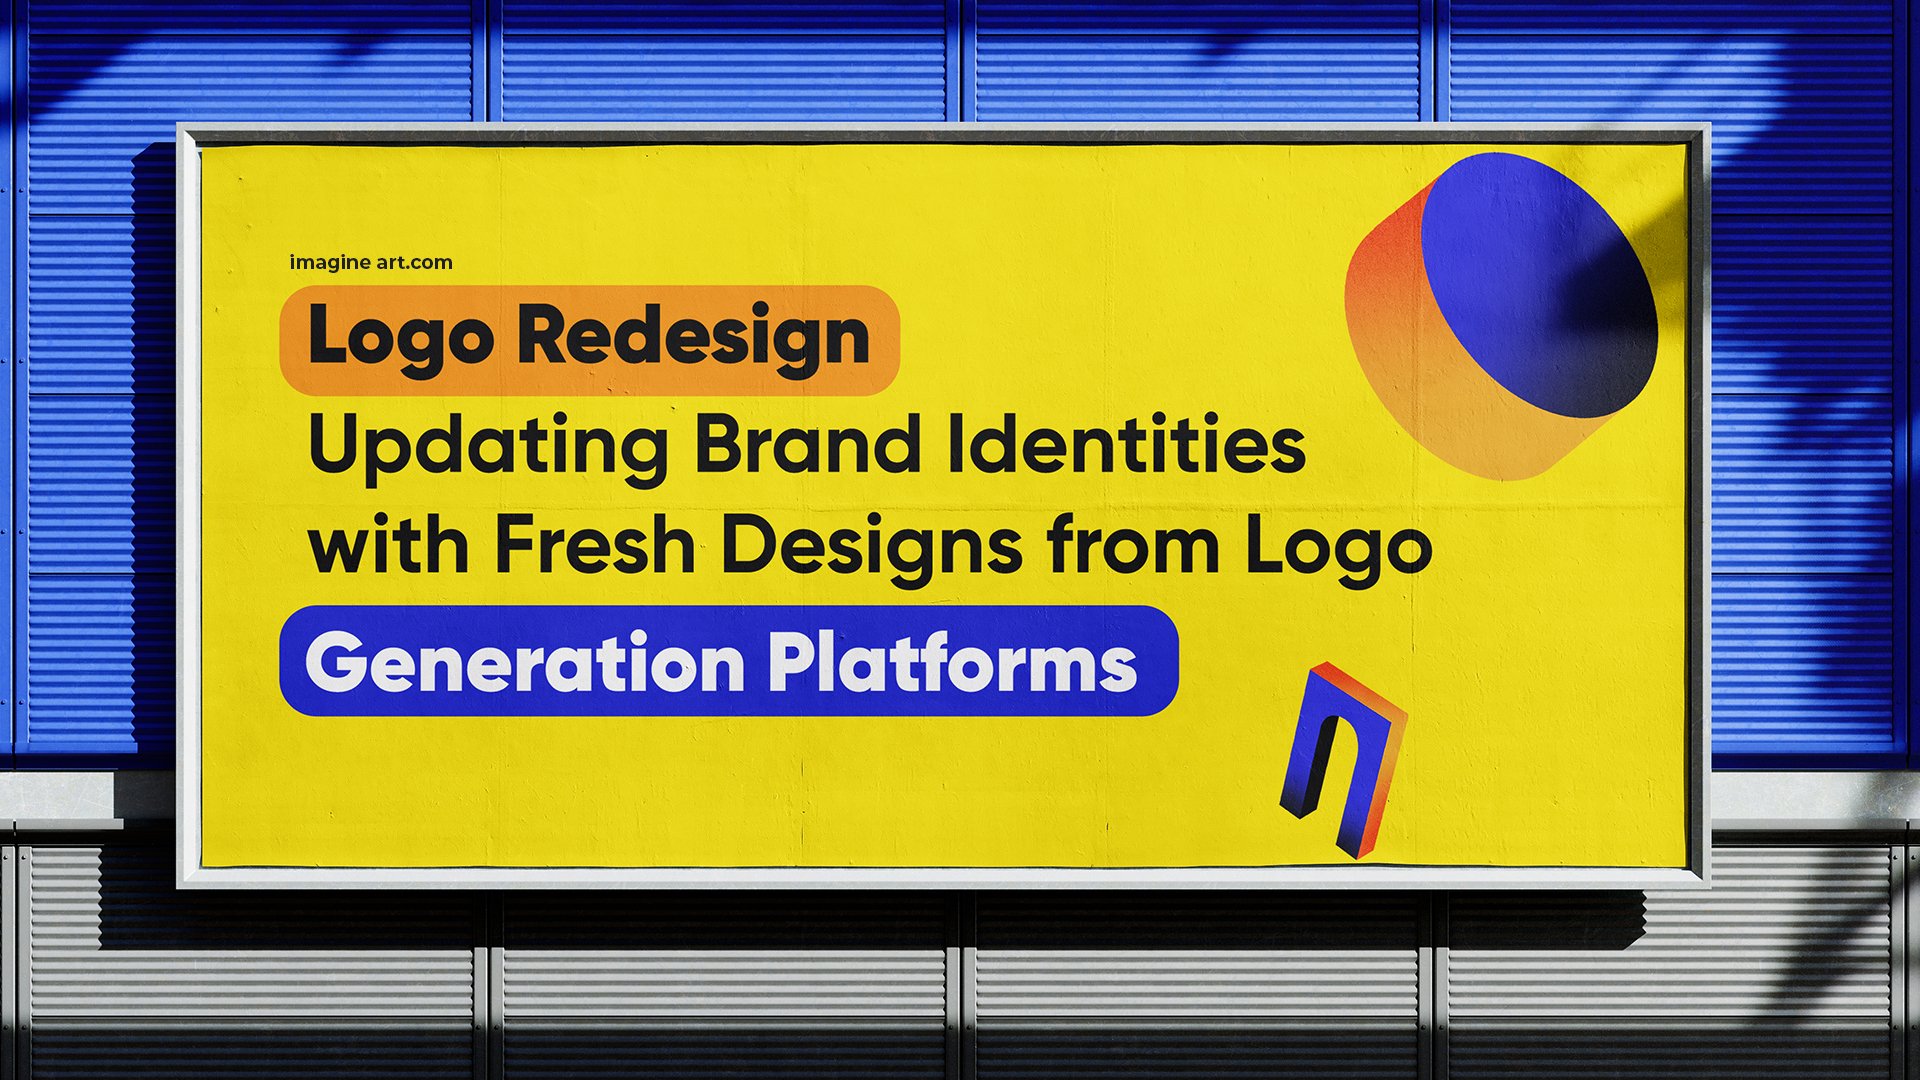 Logo Redesign: Updating Brand Identities With Fresh Designs